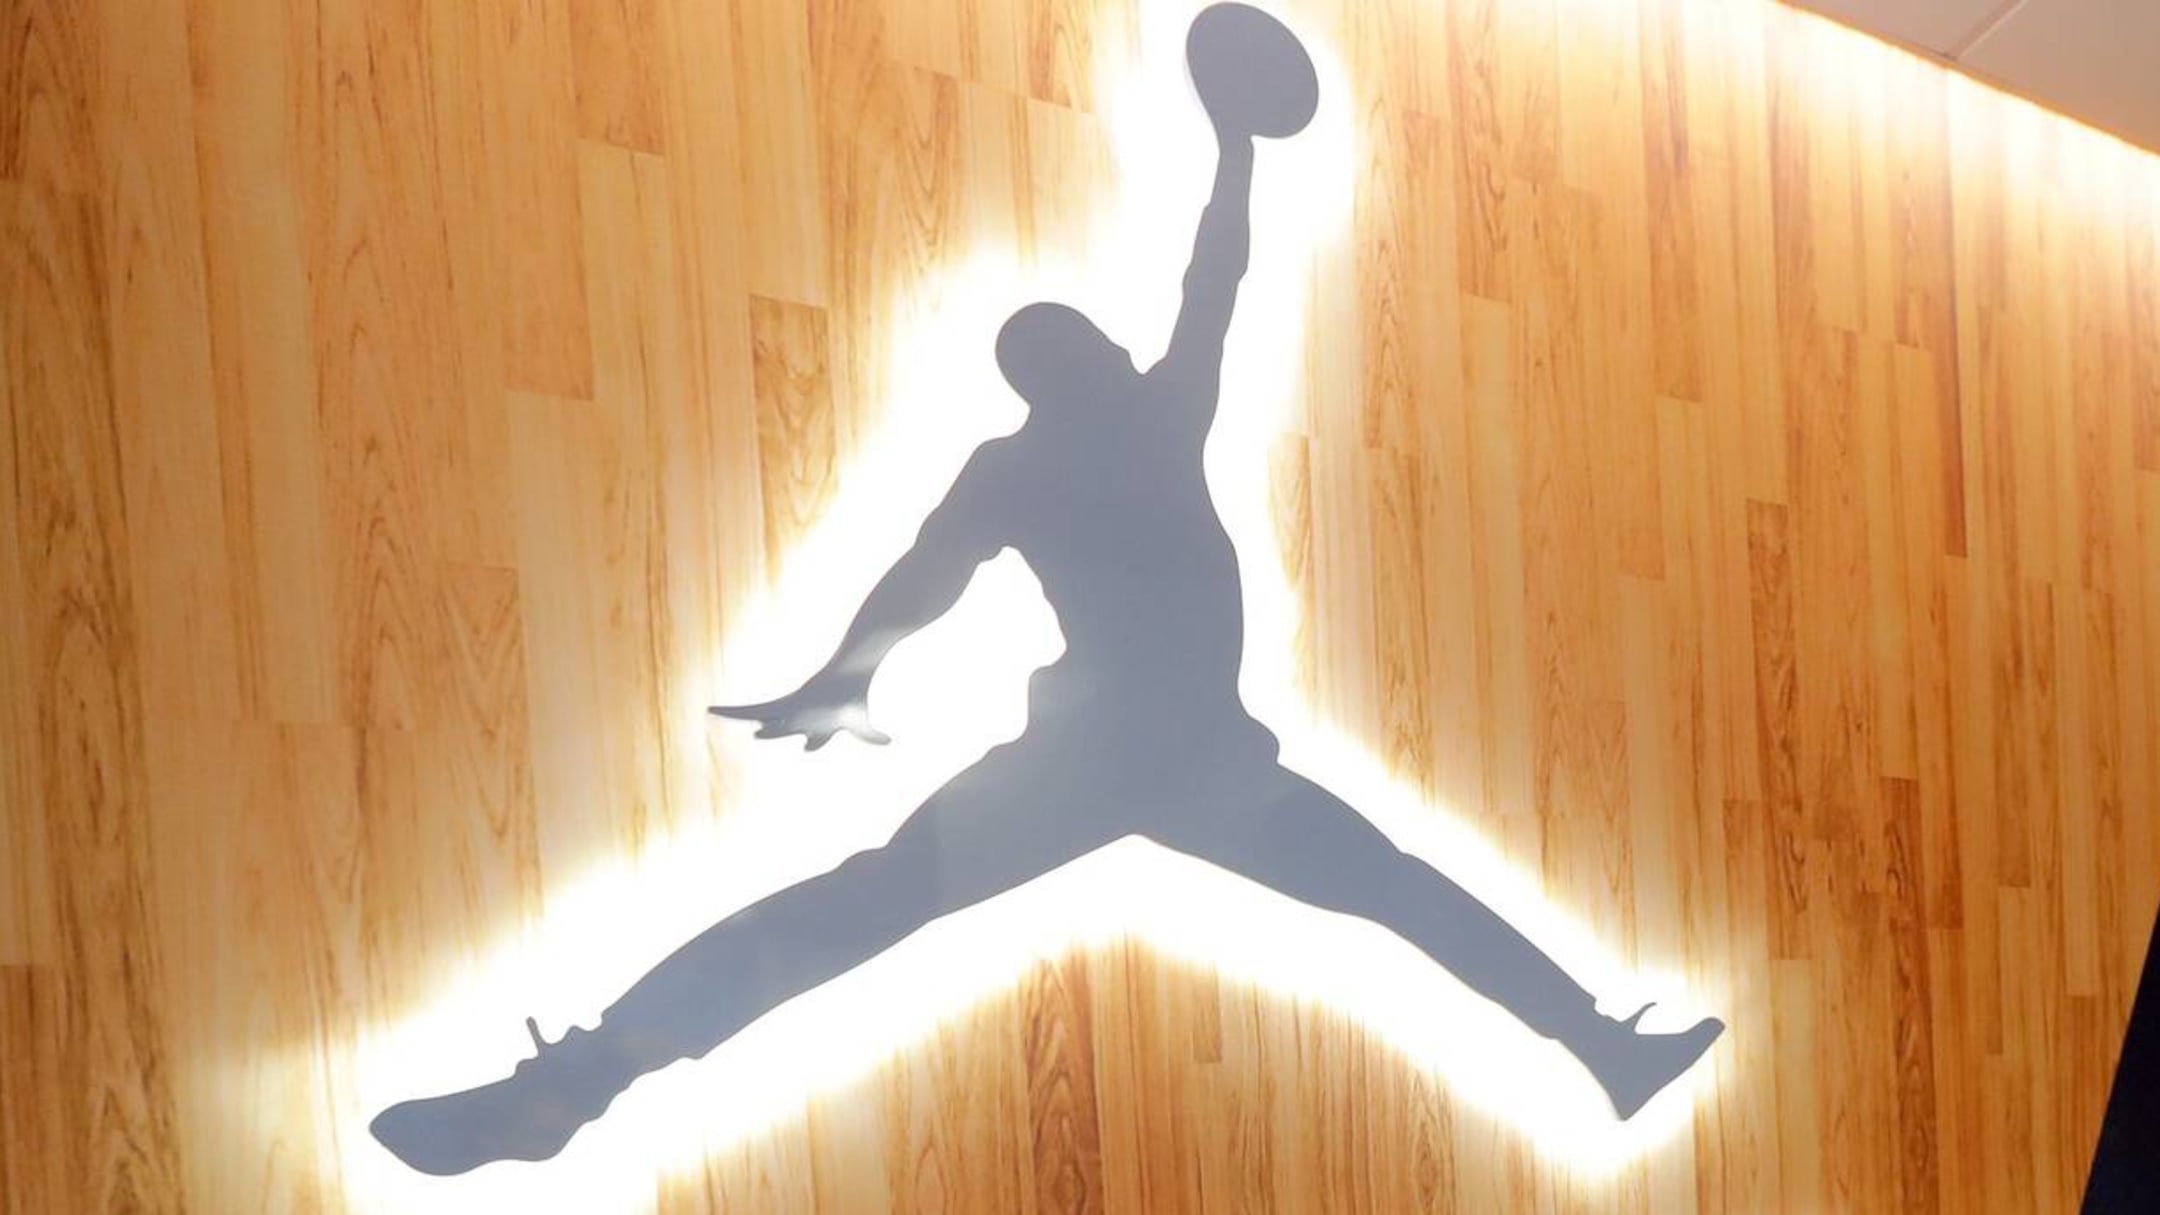 Utah Jazz pull shirts with Michael Jordan 'Jumpman' logo after fan backlash